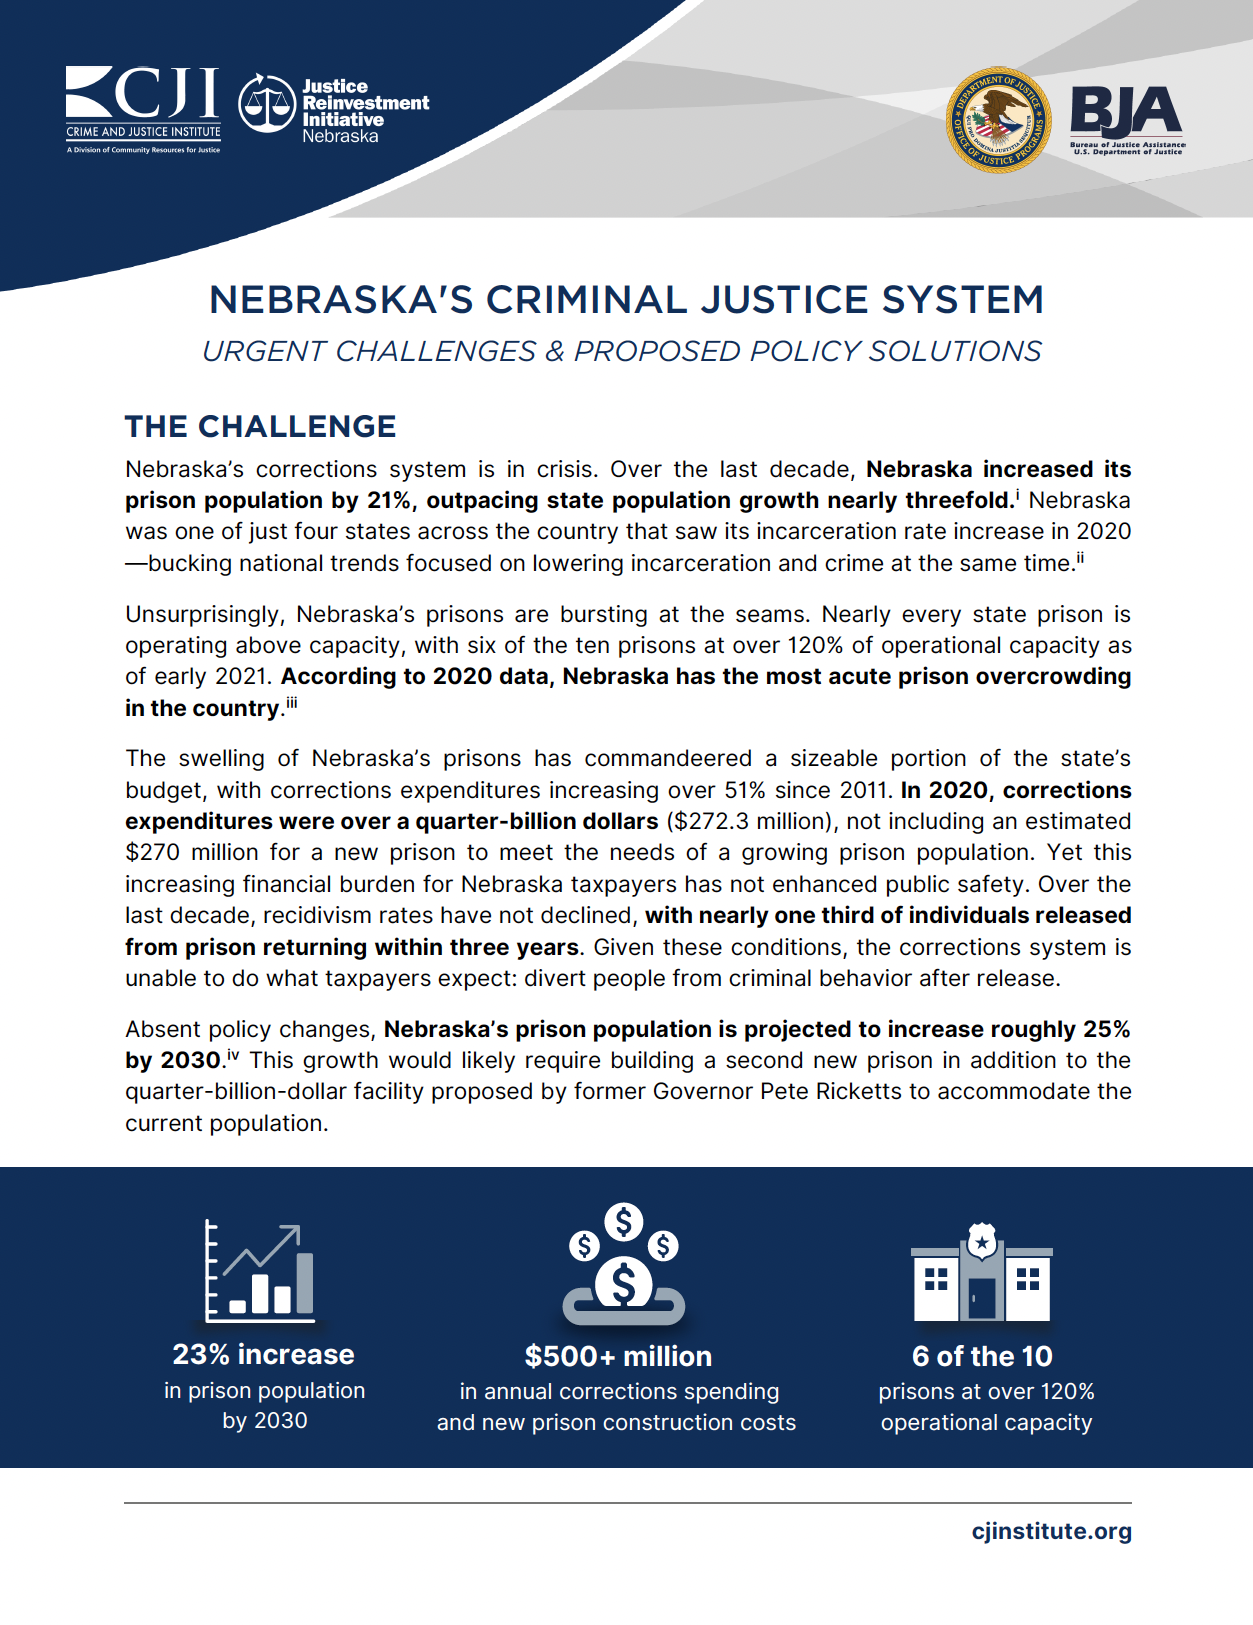 Nebraska’s Criminal Justice System: Urgent Challenges & Proposed Policy Solutions